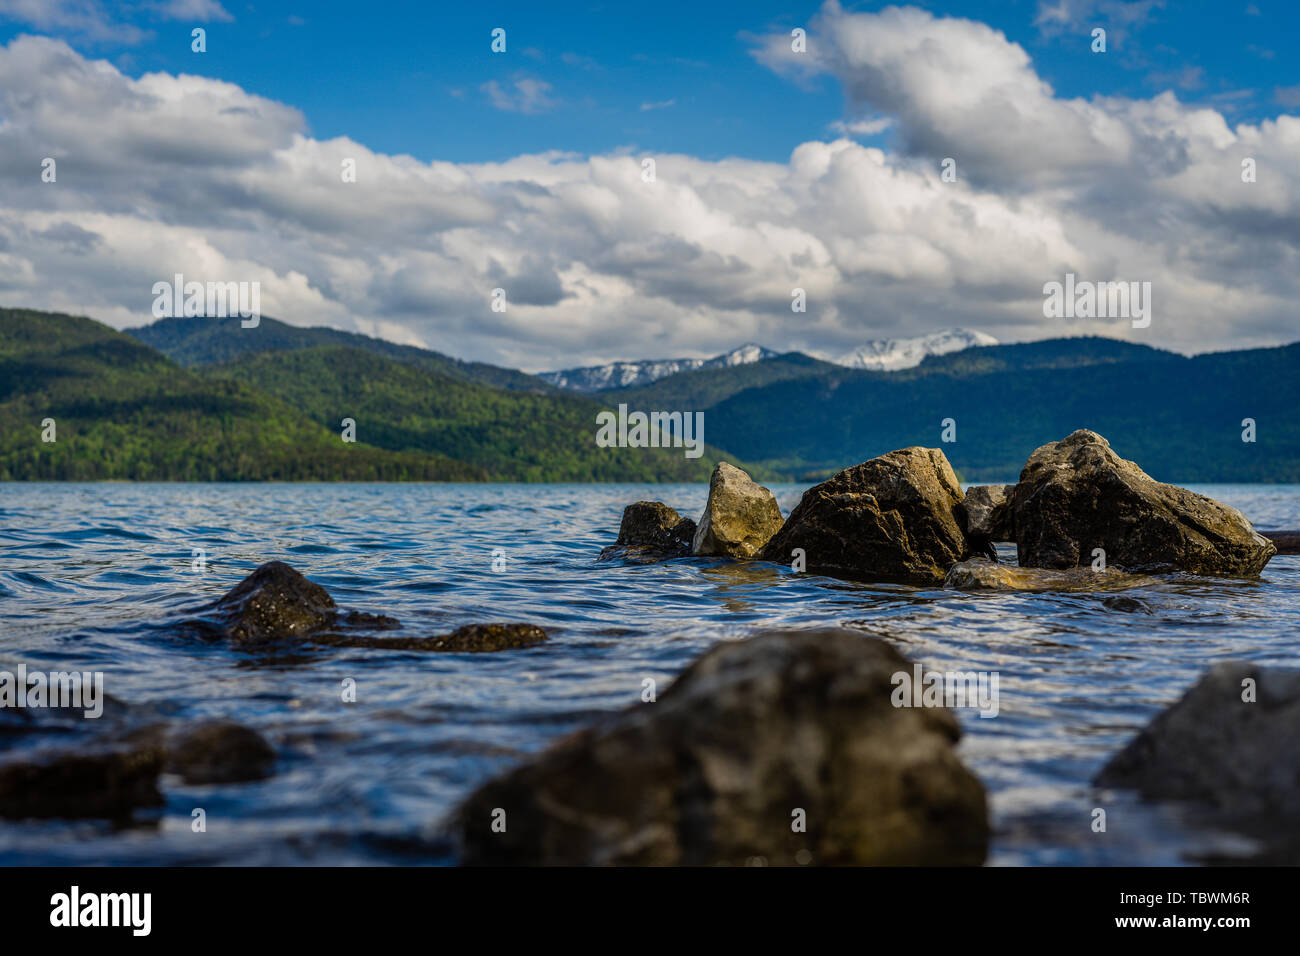 mountains, many rocks, cloudy sky, lake water Stock Photo